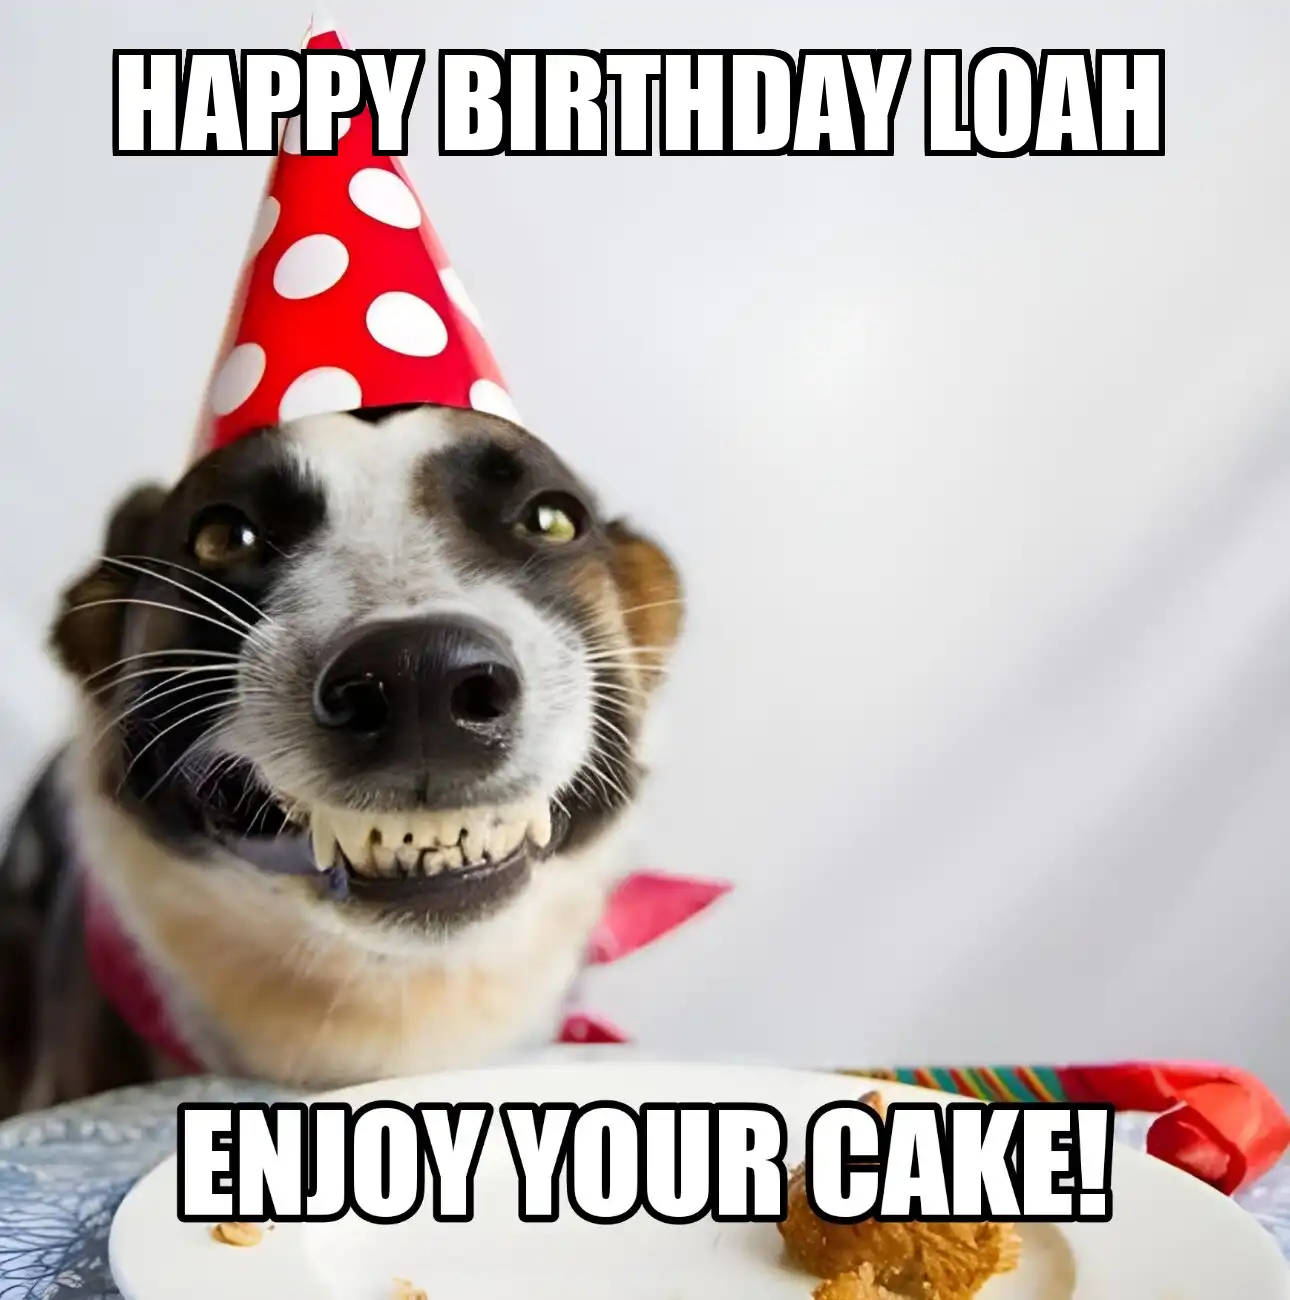 Happy Birthday Loah Enjoy Your Cake Dog Meme